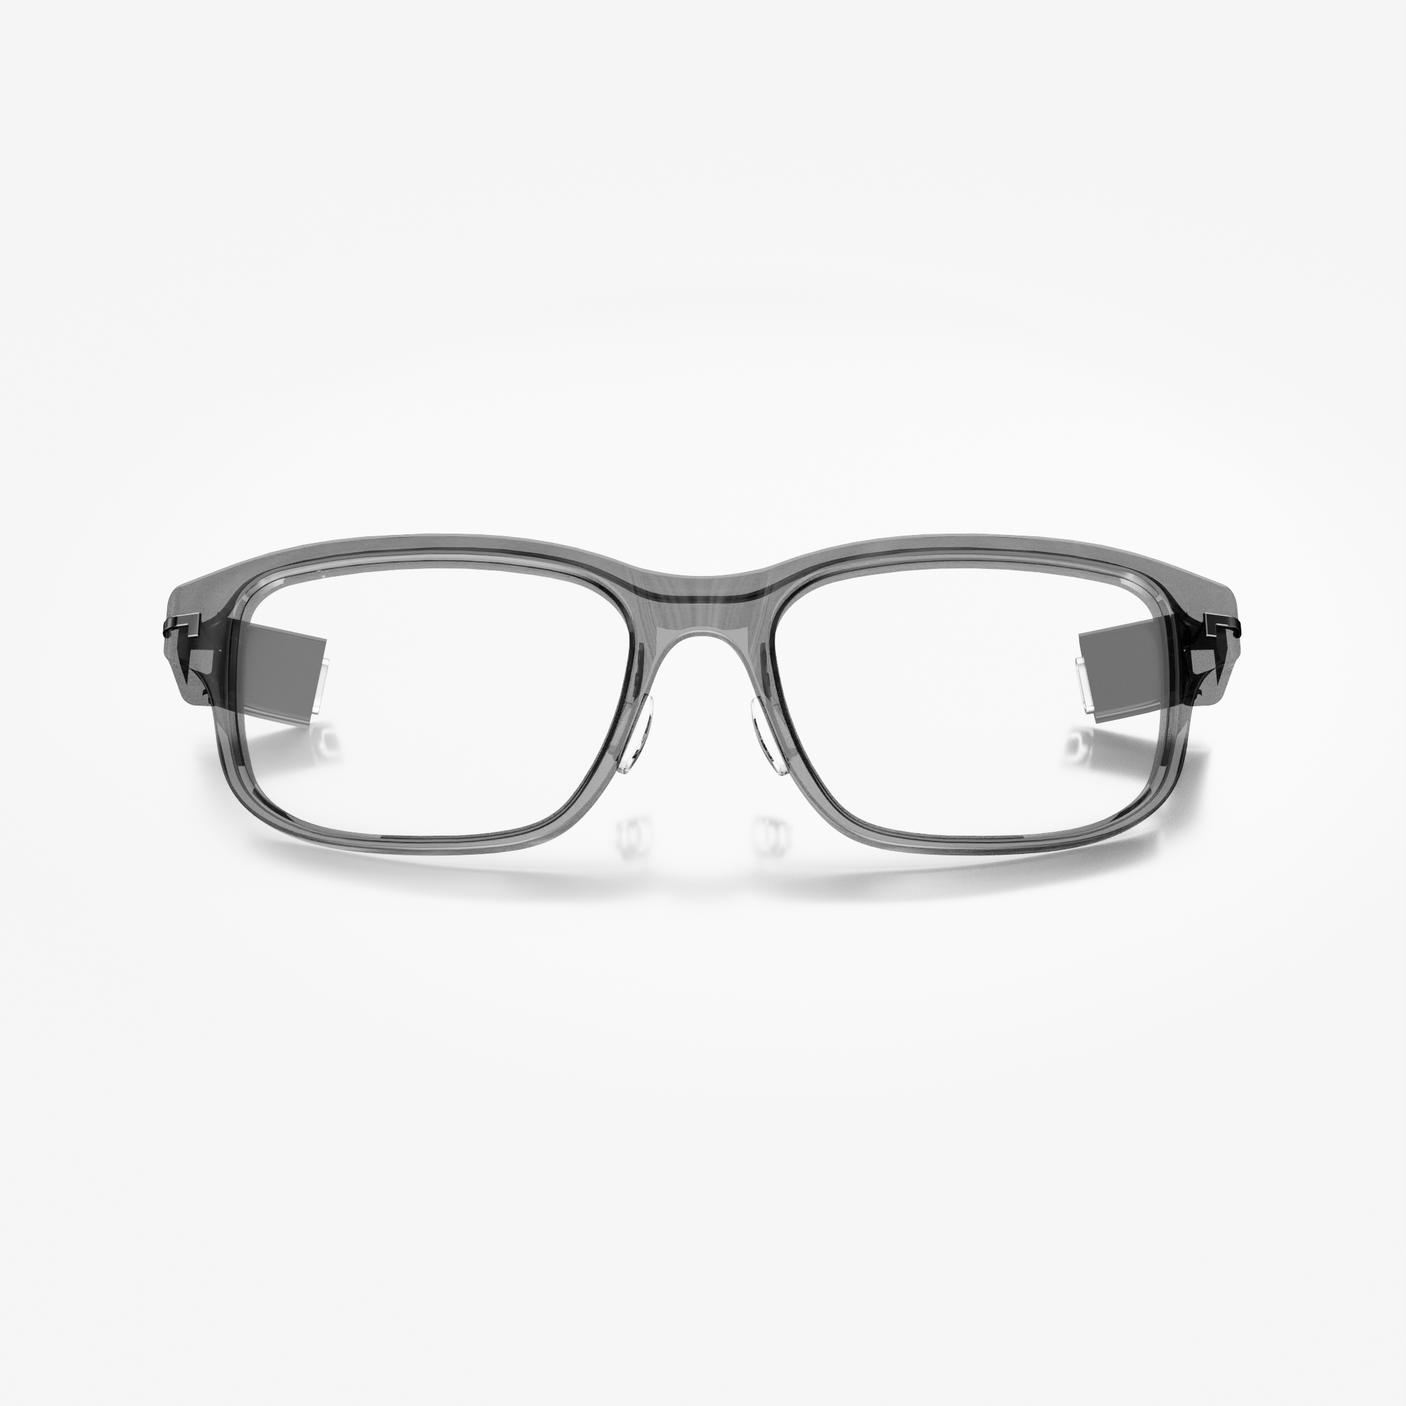 Argon 7 Smartglasses | AirGo™3